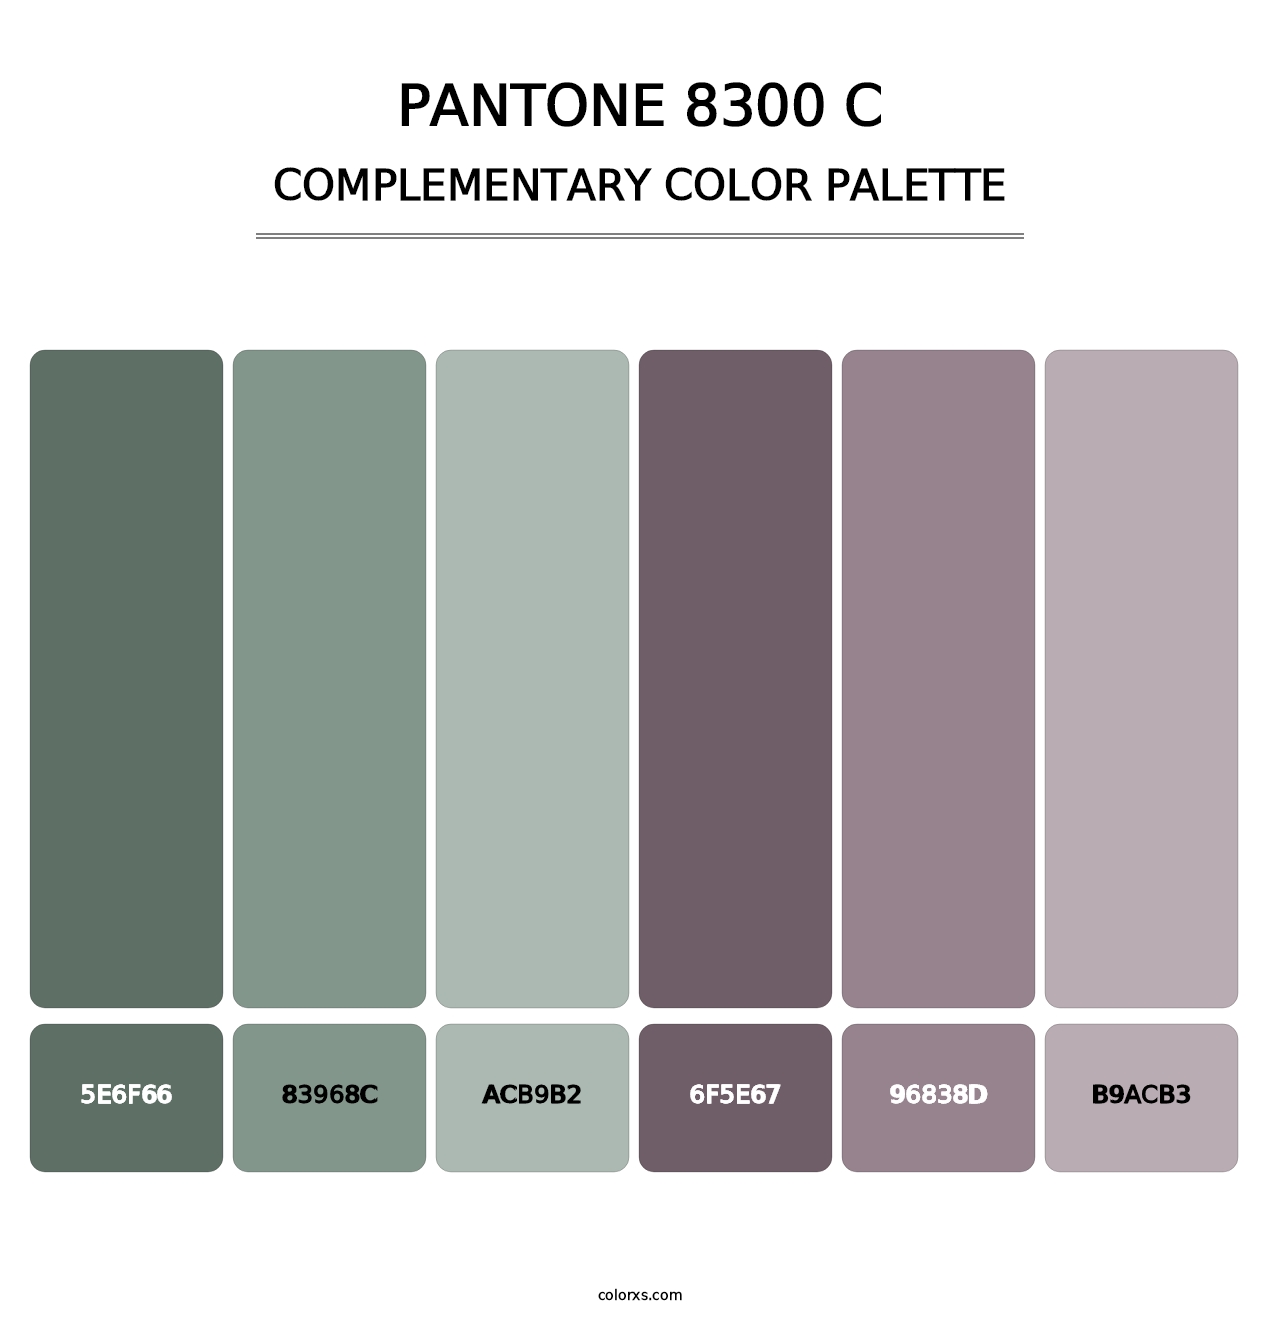 PANTONE 8300 C - Complementary Color Palette